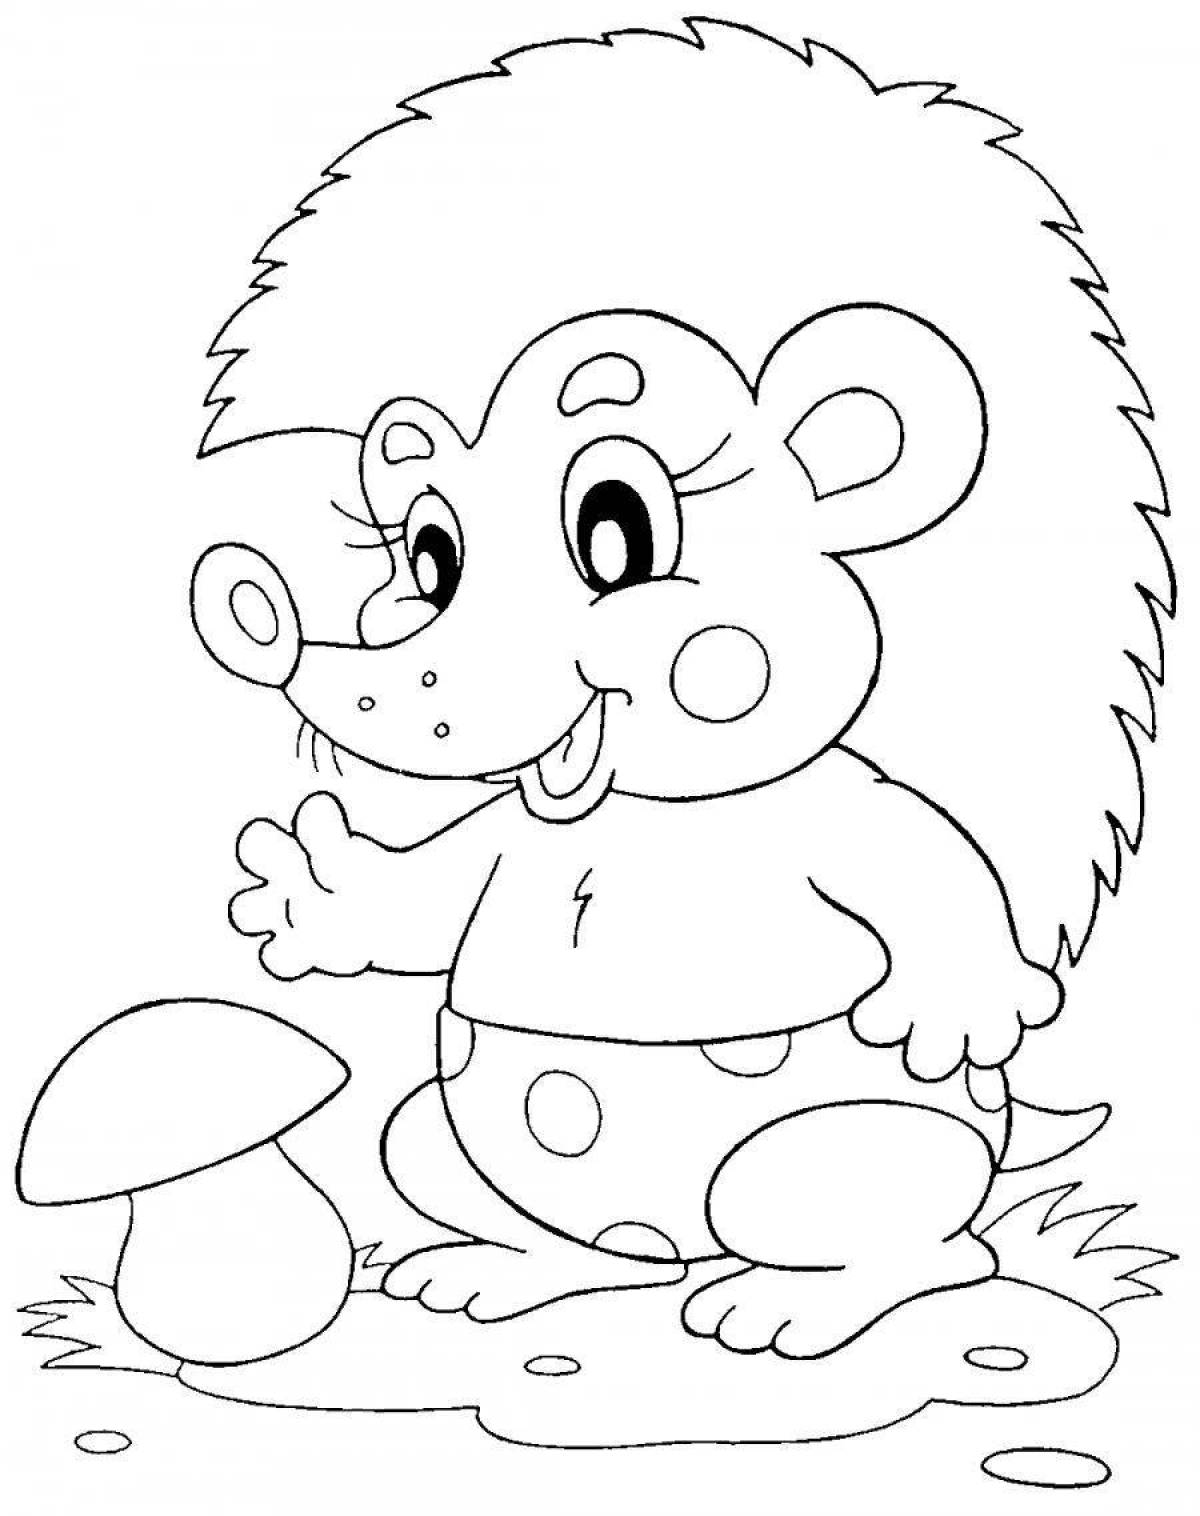 Funny hedgehog coloring book for kids